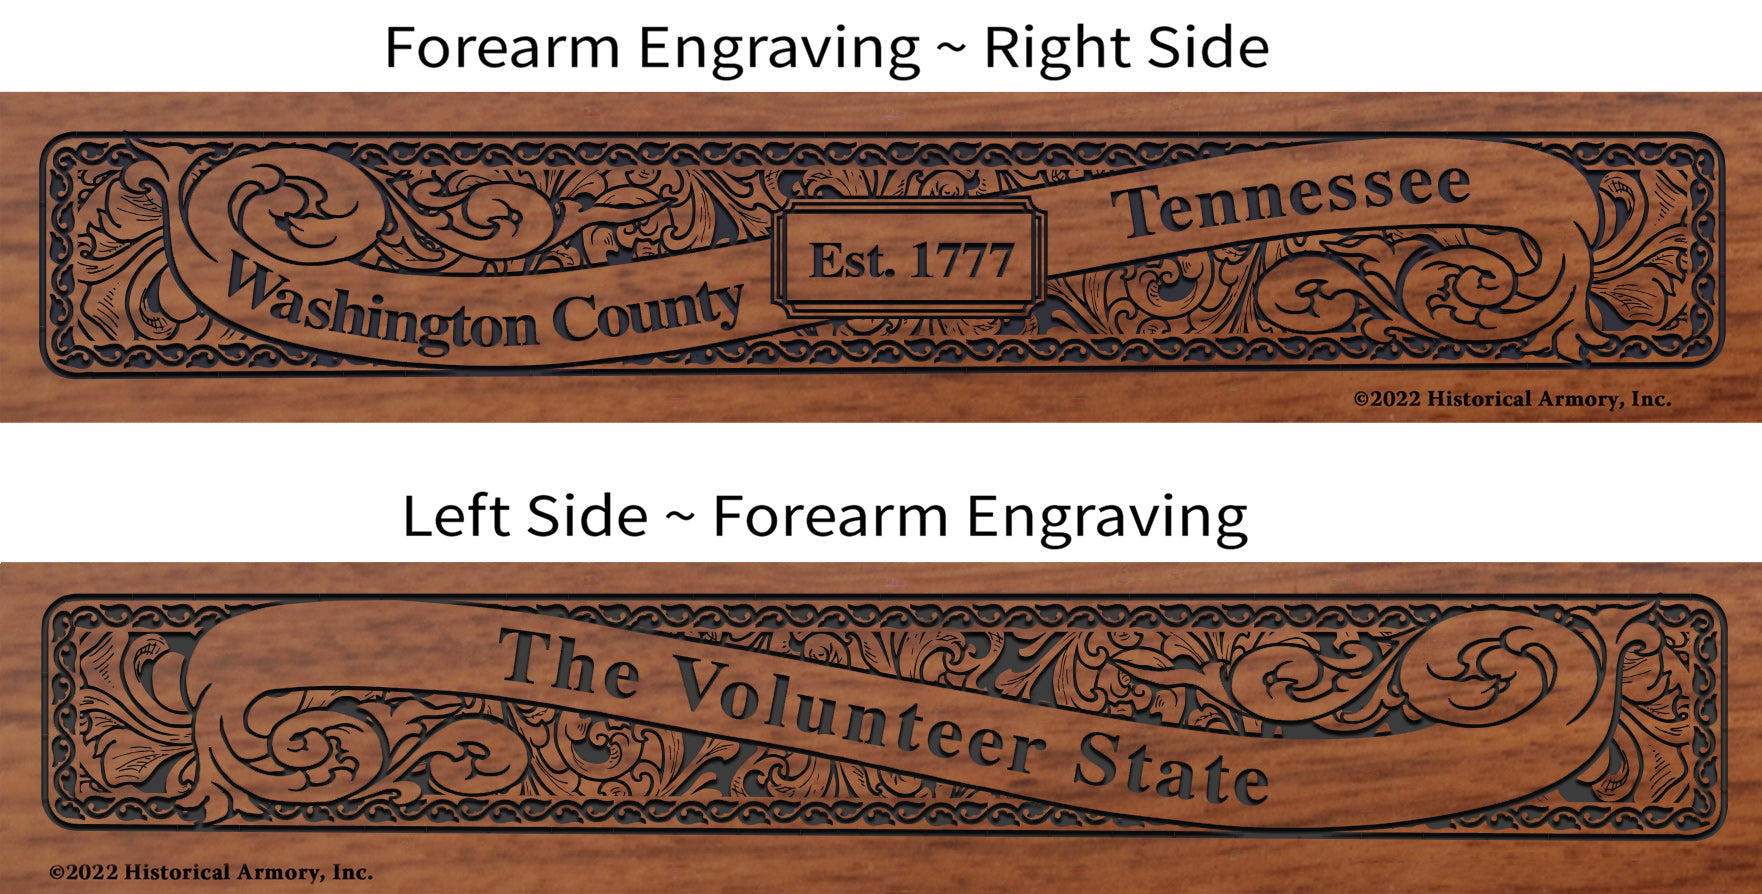 Washington County Tennessee Engraved Rifle Forearm